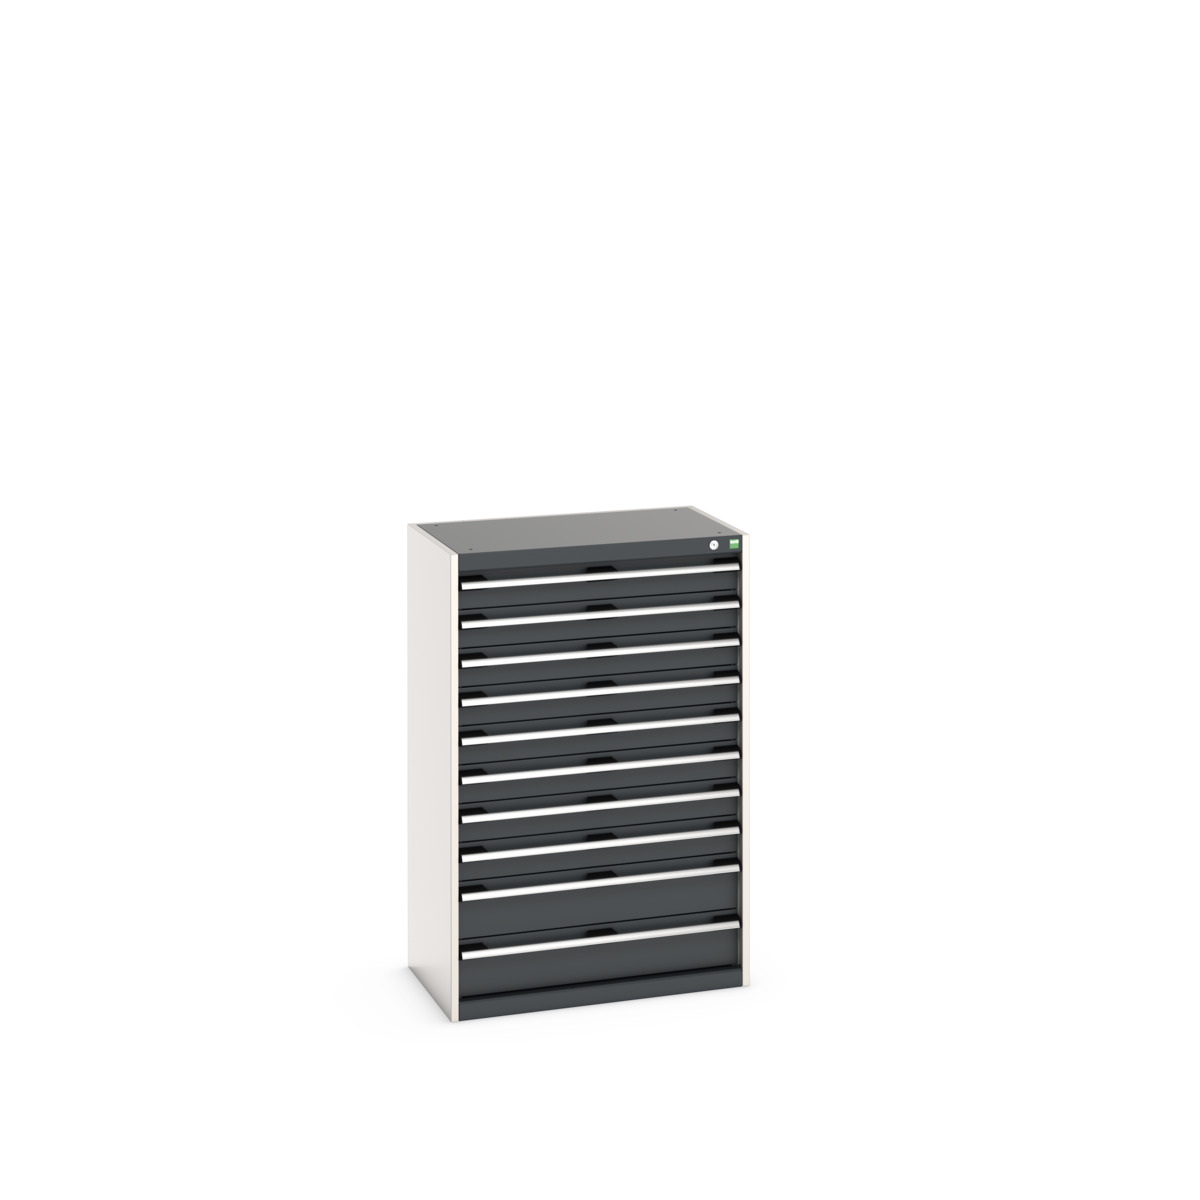 40012108. - cubio drawer cabinet